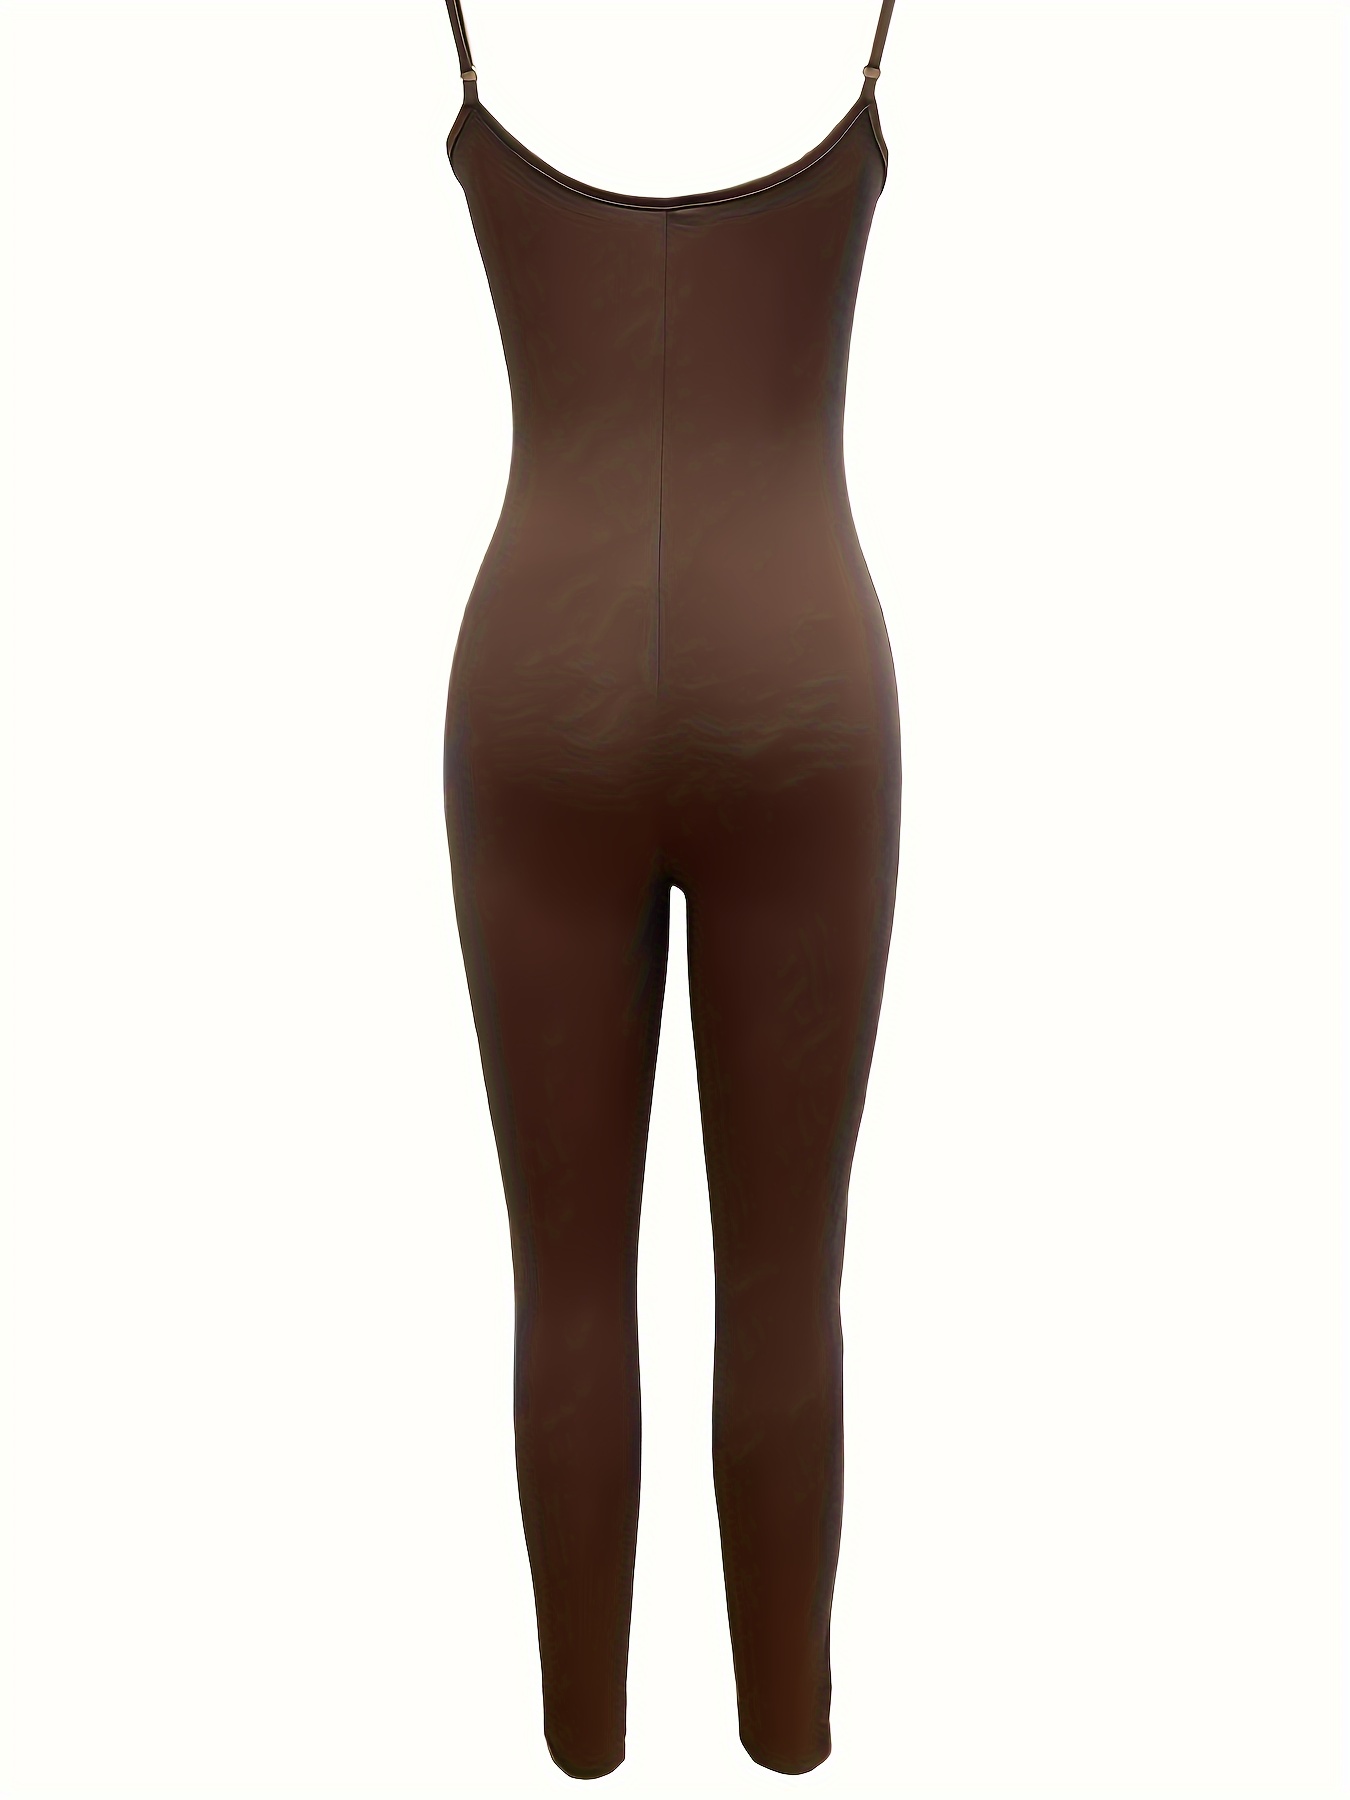 SR Women's Spaghetti Strap Comfy Bodycon Jumpsuit Shapewear (Size: S-5X)  UR1010